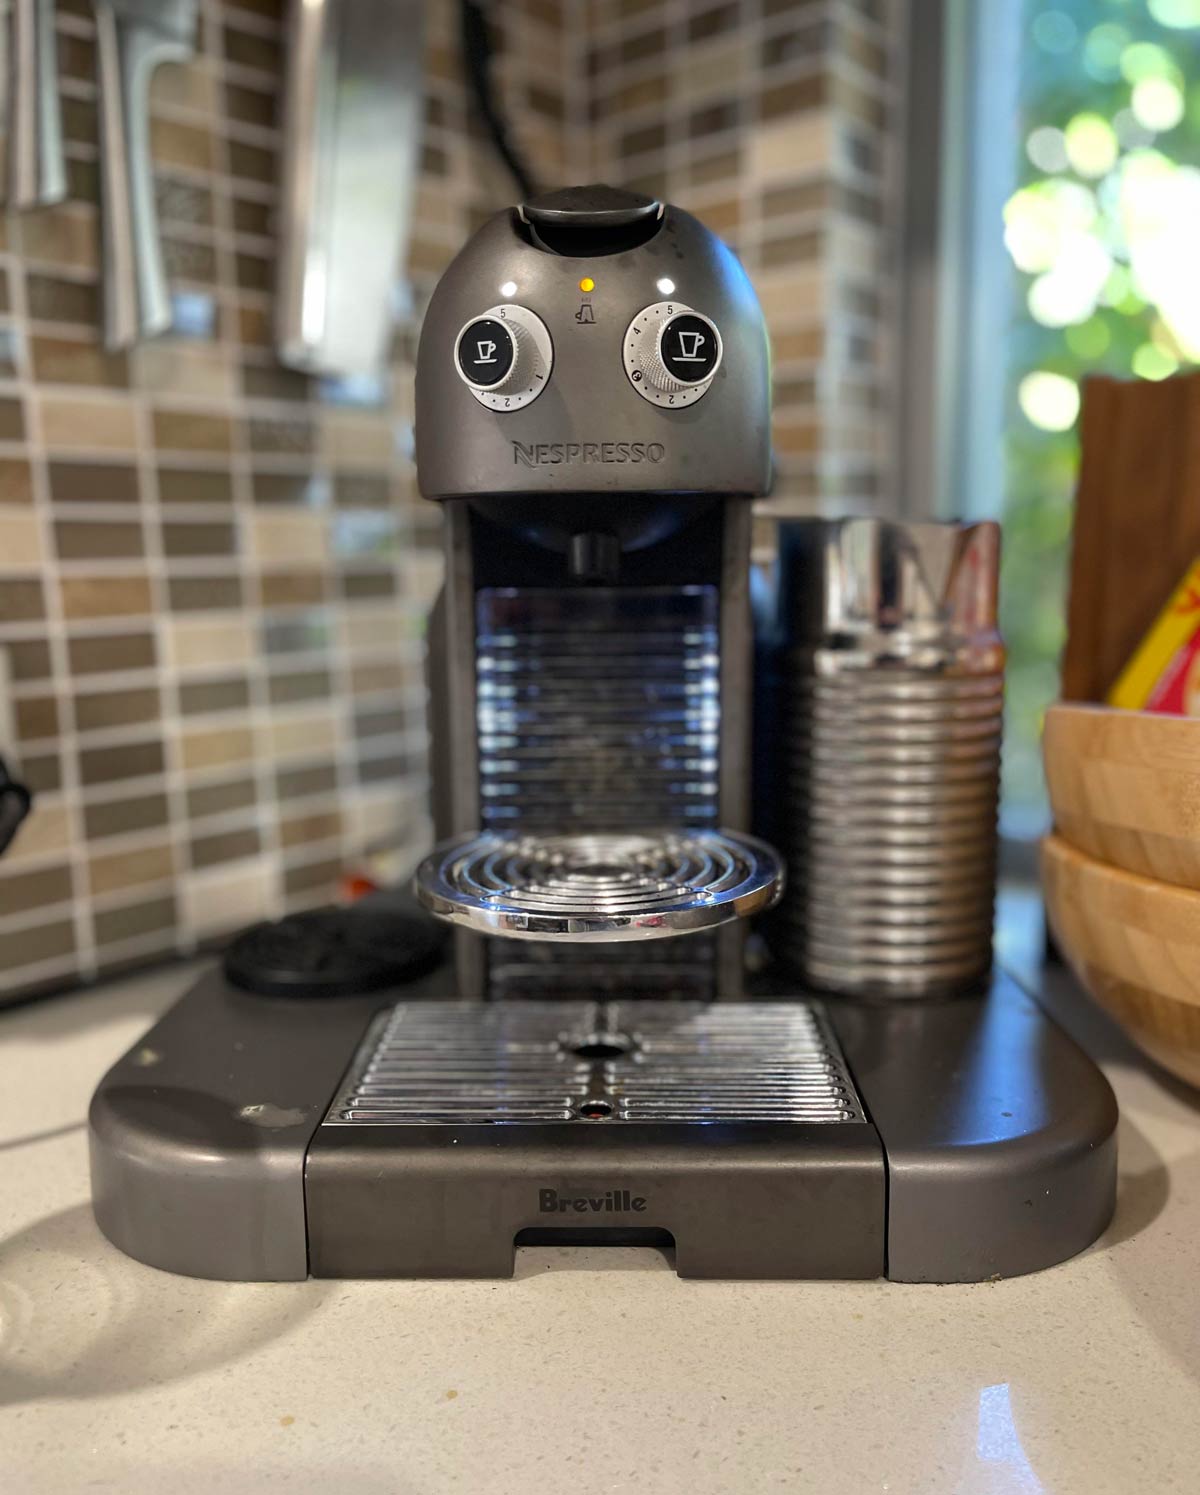 One very surprised coffee machine..